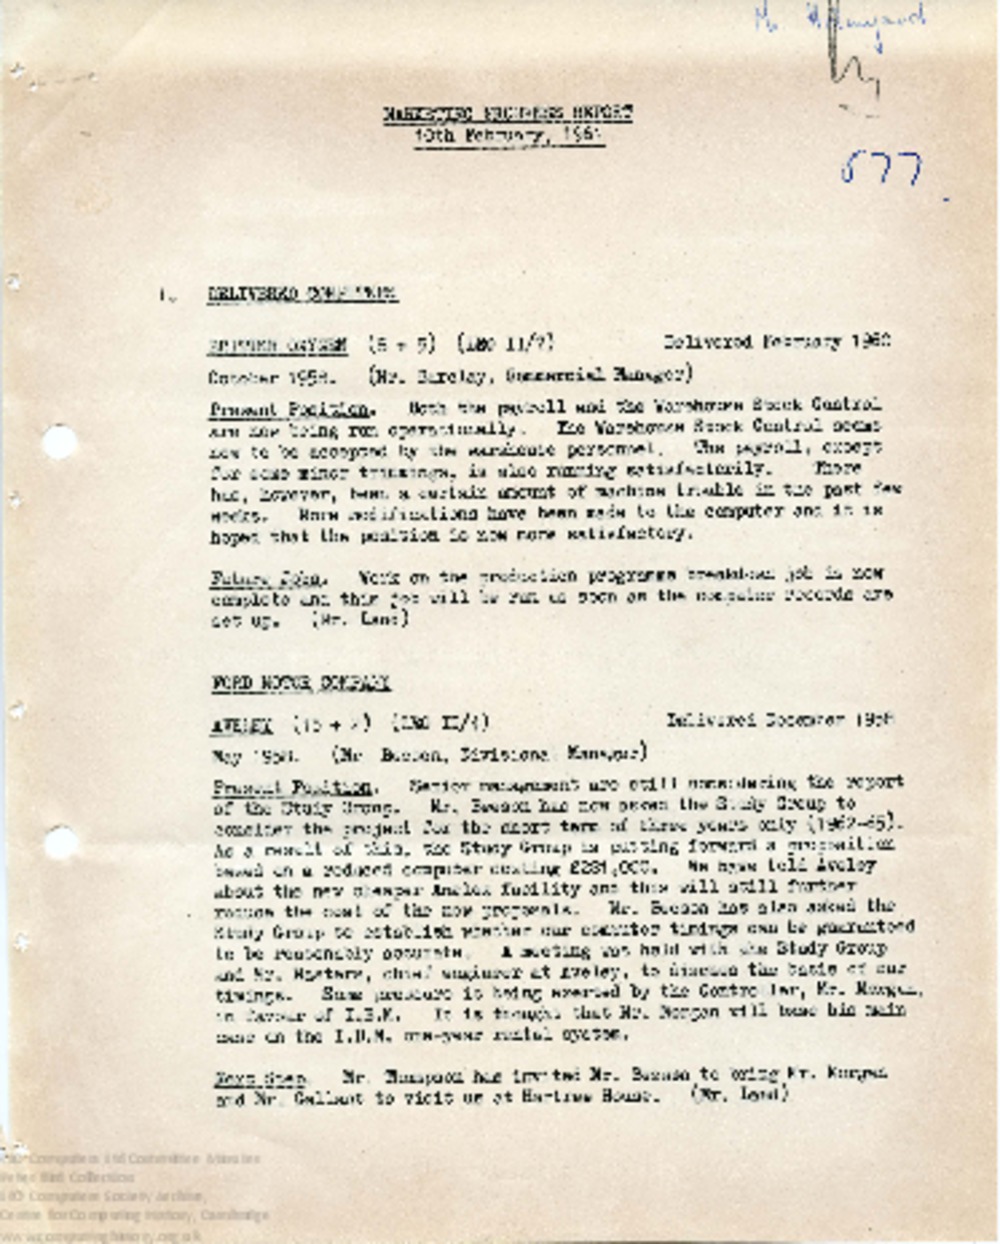 Article: 64496 Marketing Progress Report, 10th Feb 1961